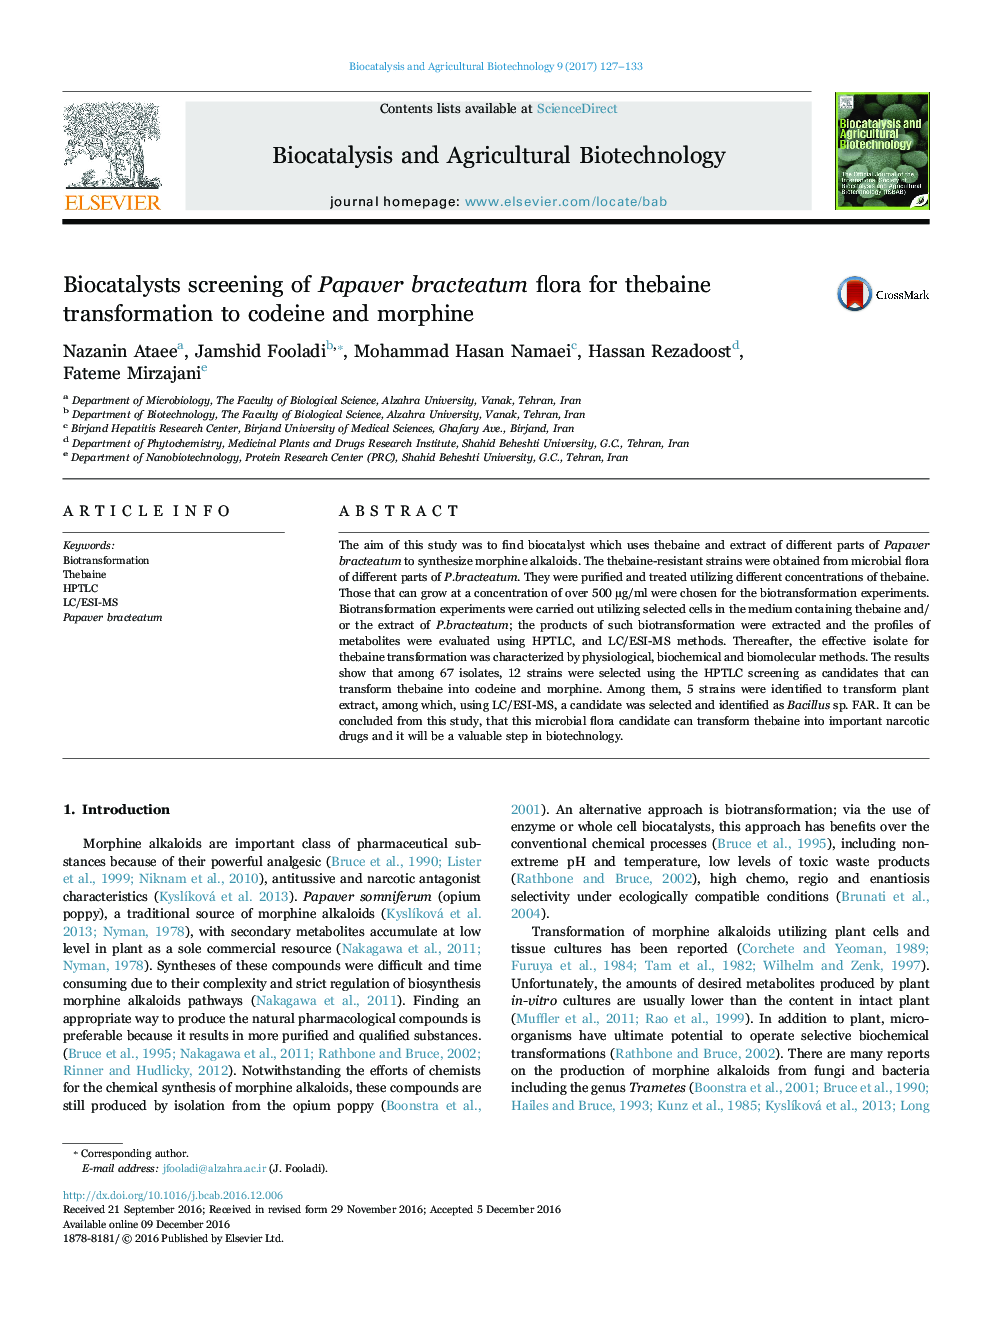 Biocatalysts screening of Papaver bracteatum flora for thebaine transformation to codeine and morphine